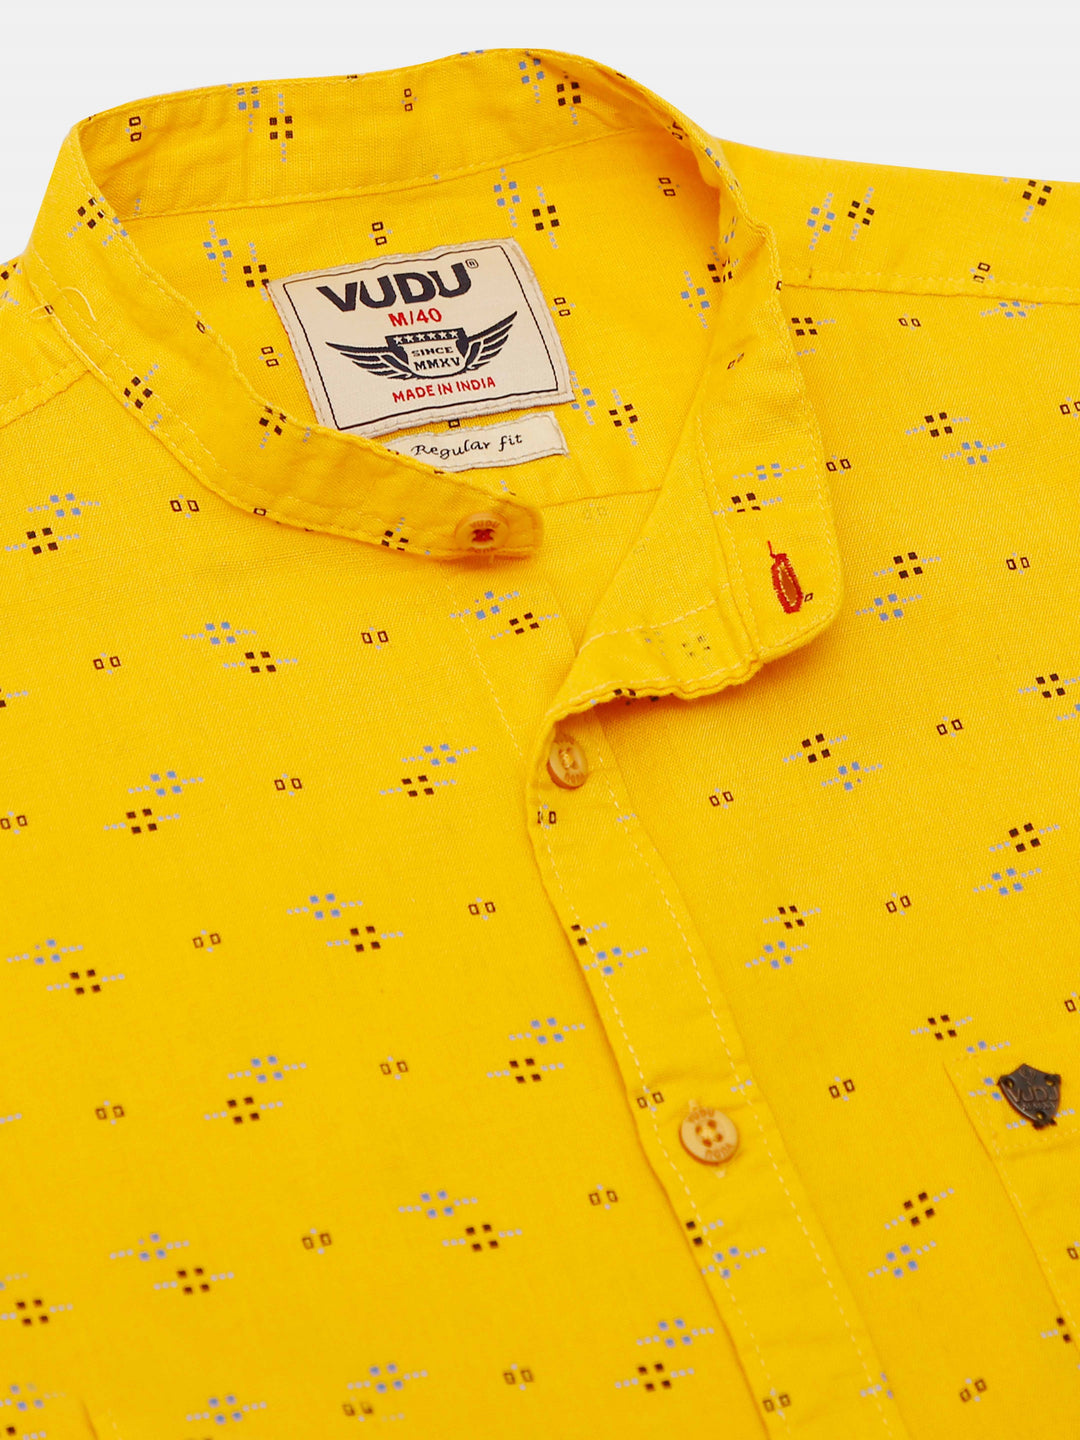 Geometric Print Mustard Shirt